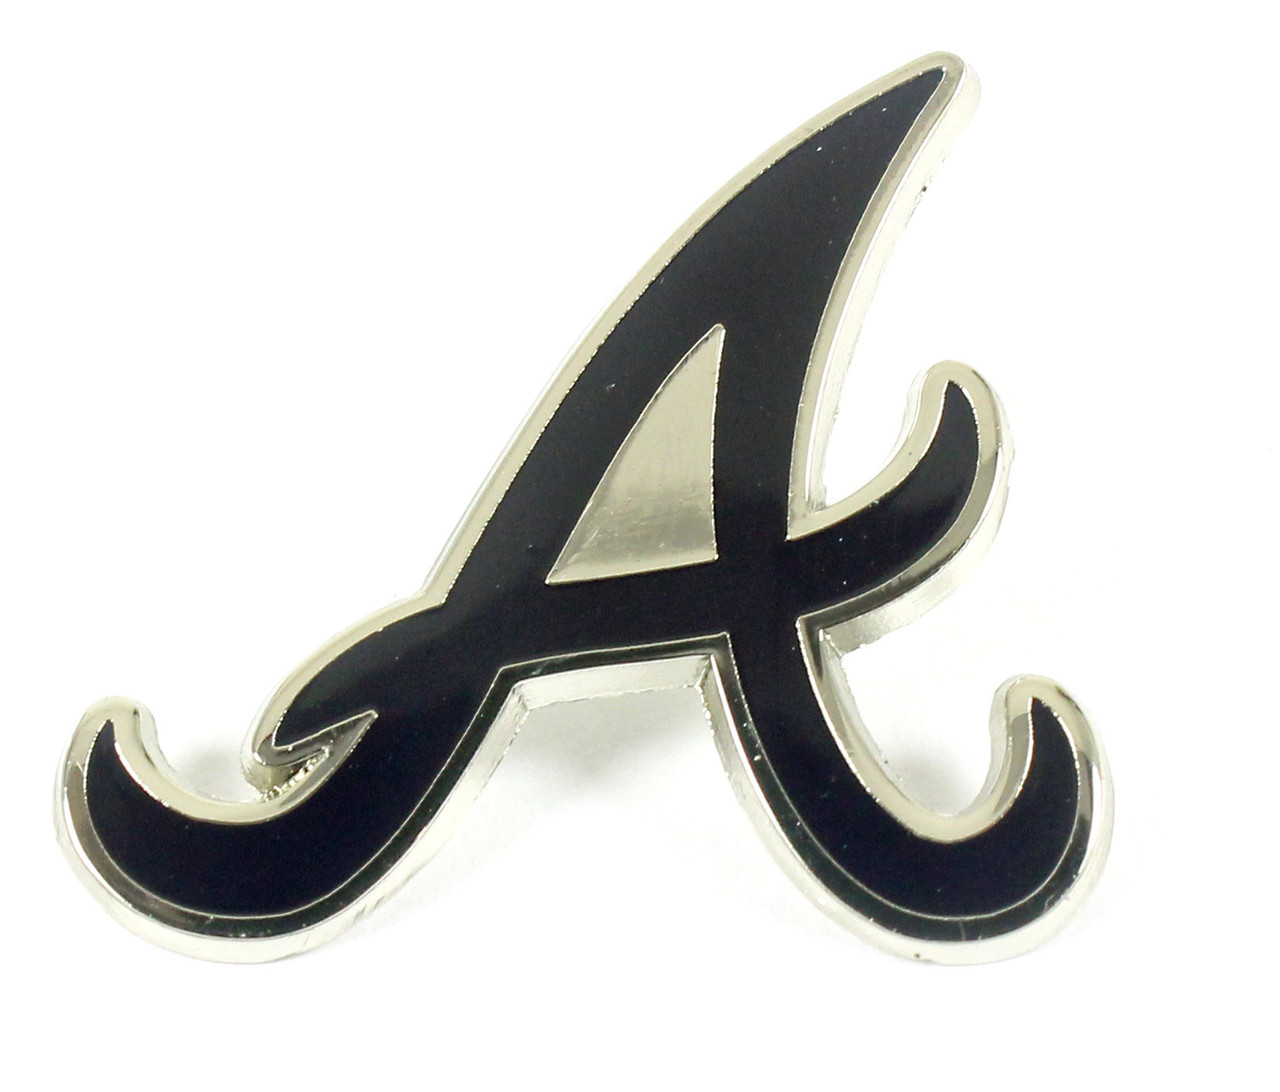 Pin on Atlanta Braves